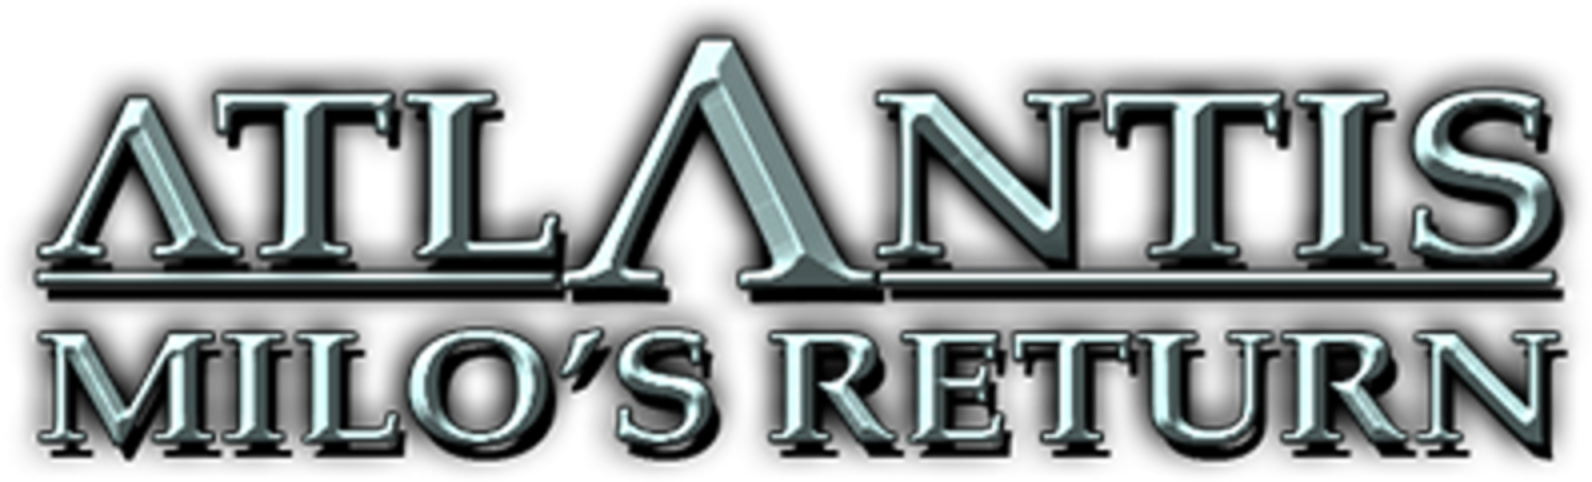 Atlantis: Milo's Return  Full Movie (1 DVD Box Set)